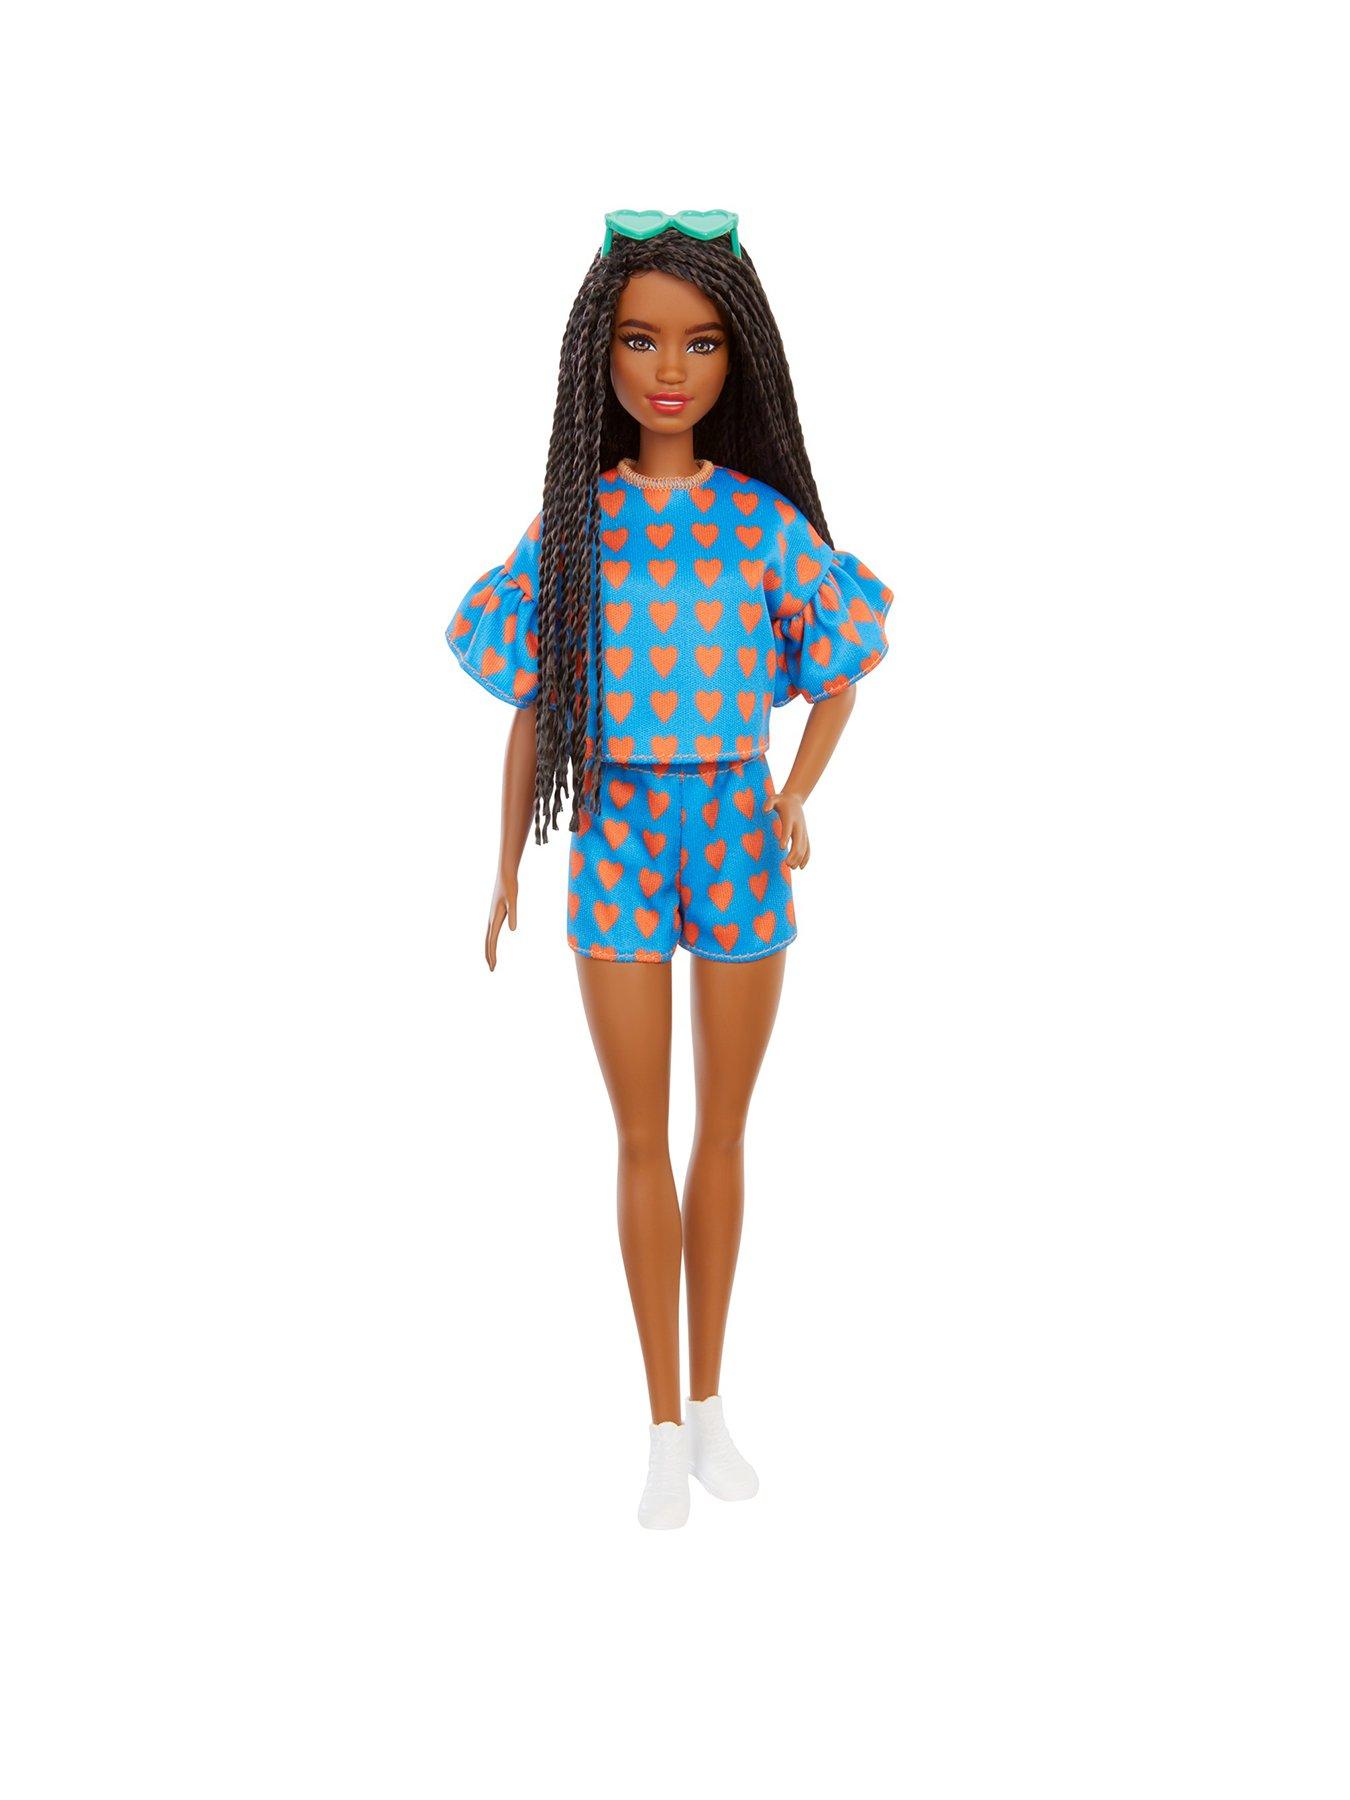 Sparkle Girlz Stripe Print Top Long Sleeve Shirt fits Barbie PETITE REGULAR Doll